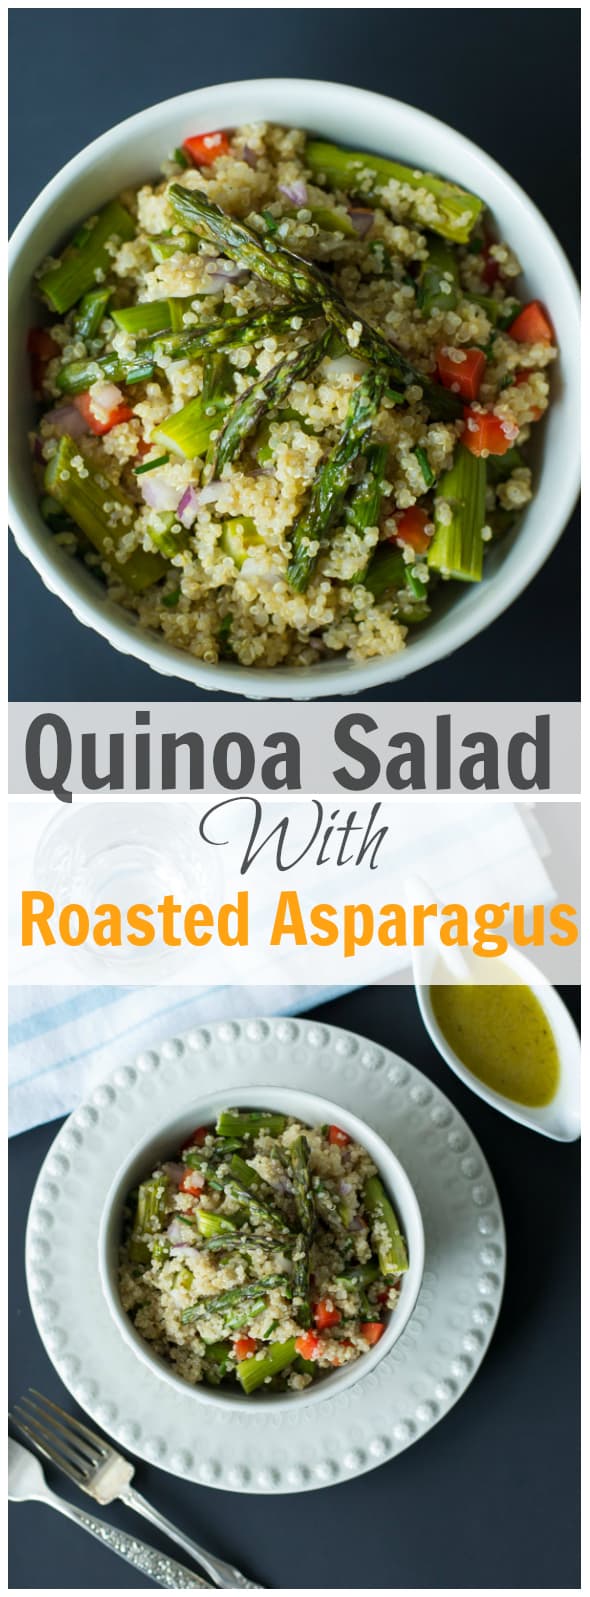 Quinoa Salad with Roasted Asparagus